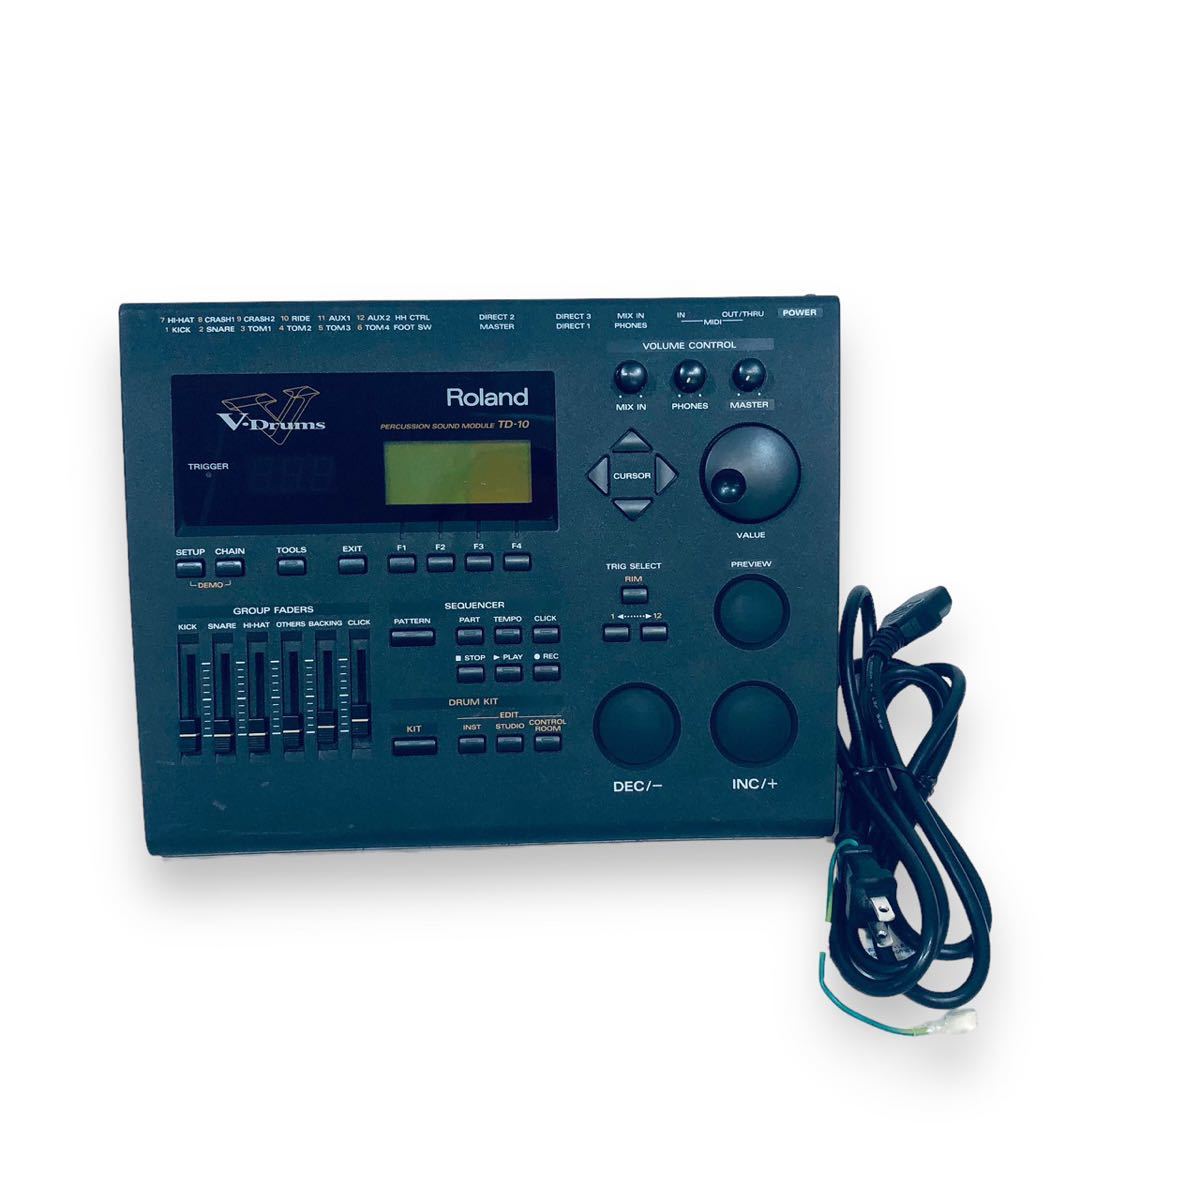 YAMAHA 電子ドラム 音源モジュール DTXPRESS 3 通電確認済み | JChere